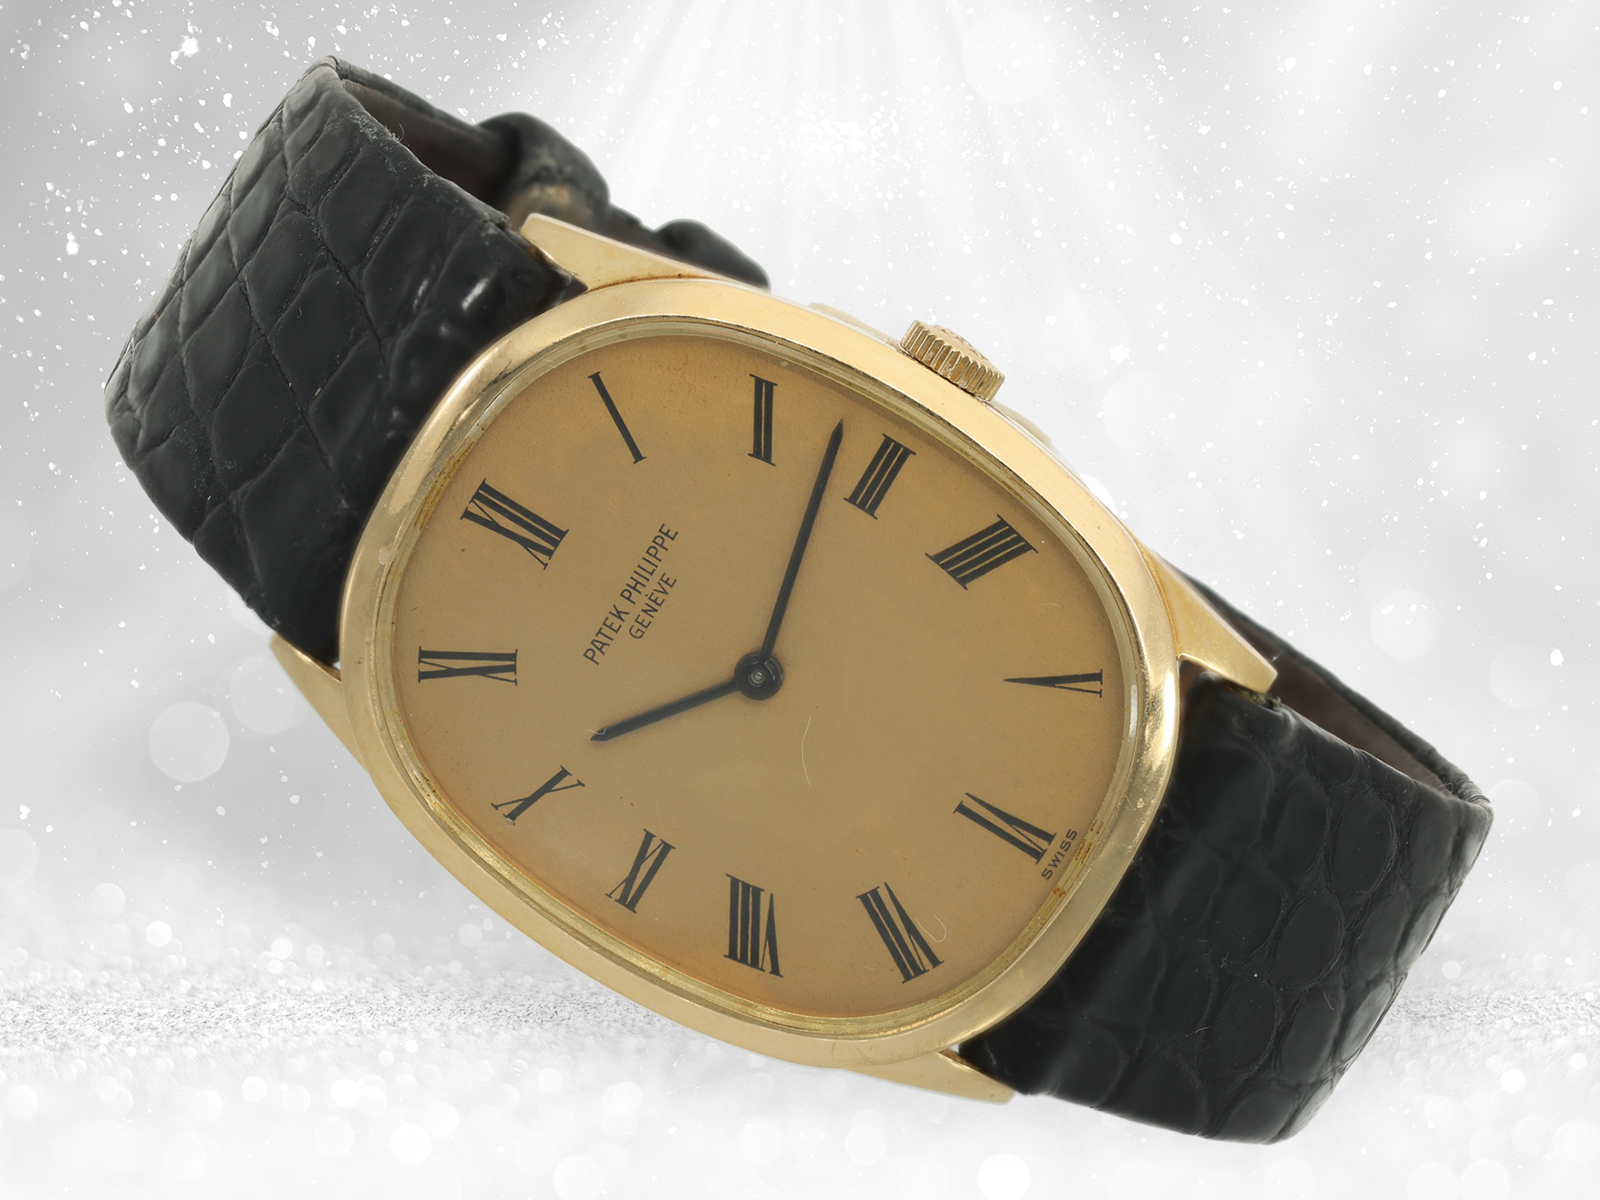 Wristwatch: very fine vintage man's watch, Patek Philippe Ellipse d'Or Ref. 3546, 1970s - Image 2 of 6